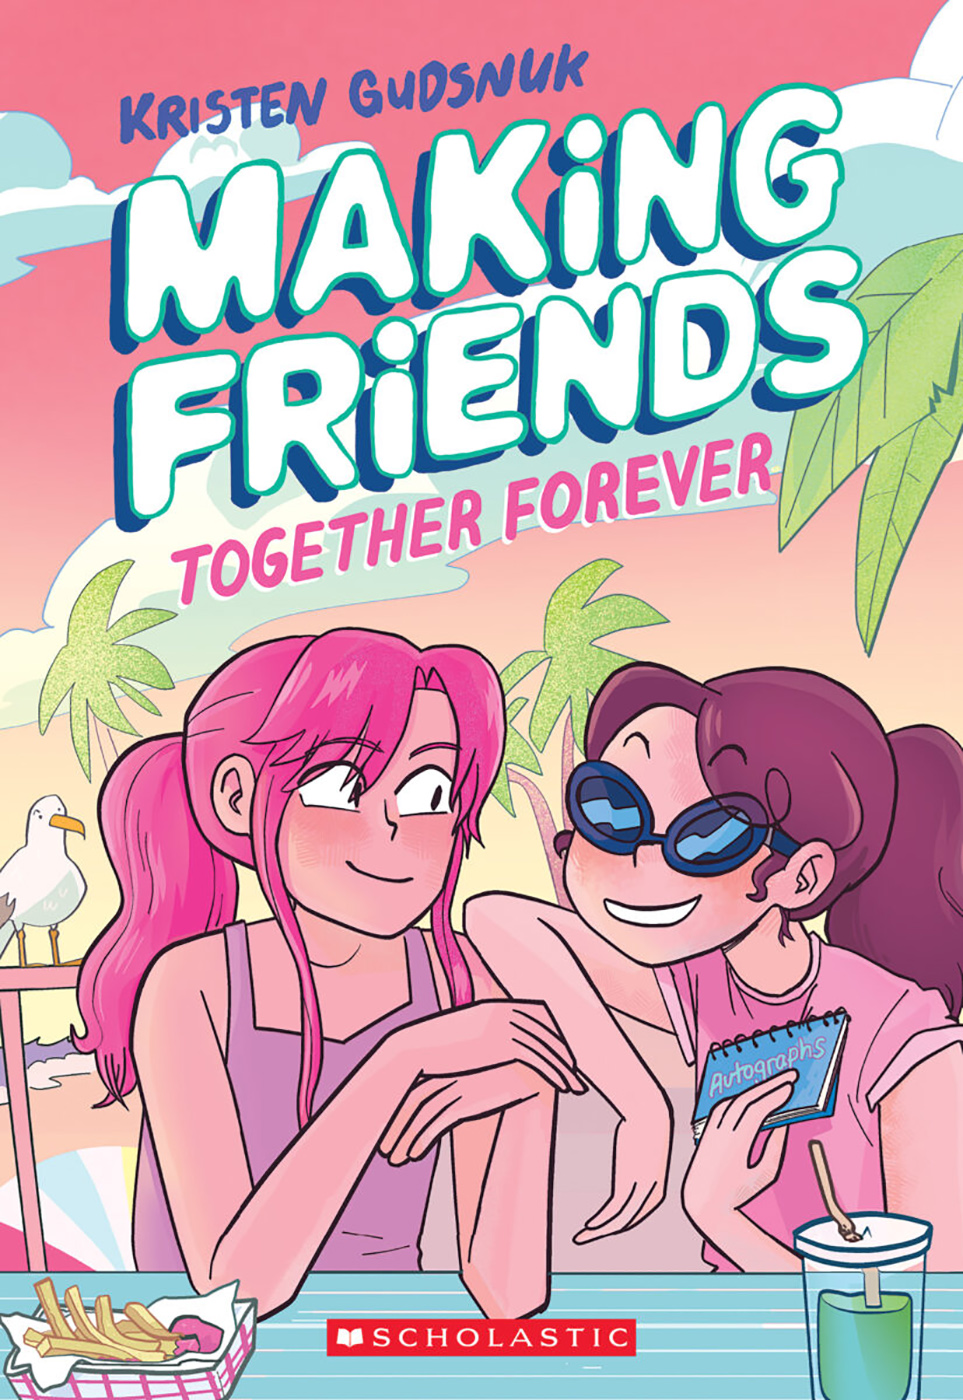 Together Forever (Making Friends #4)